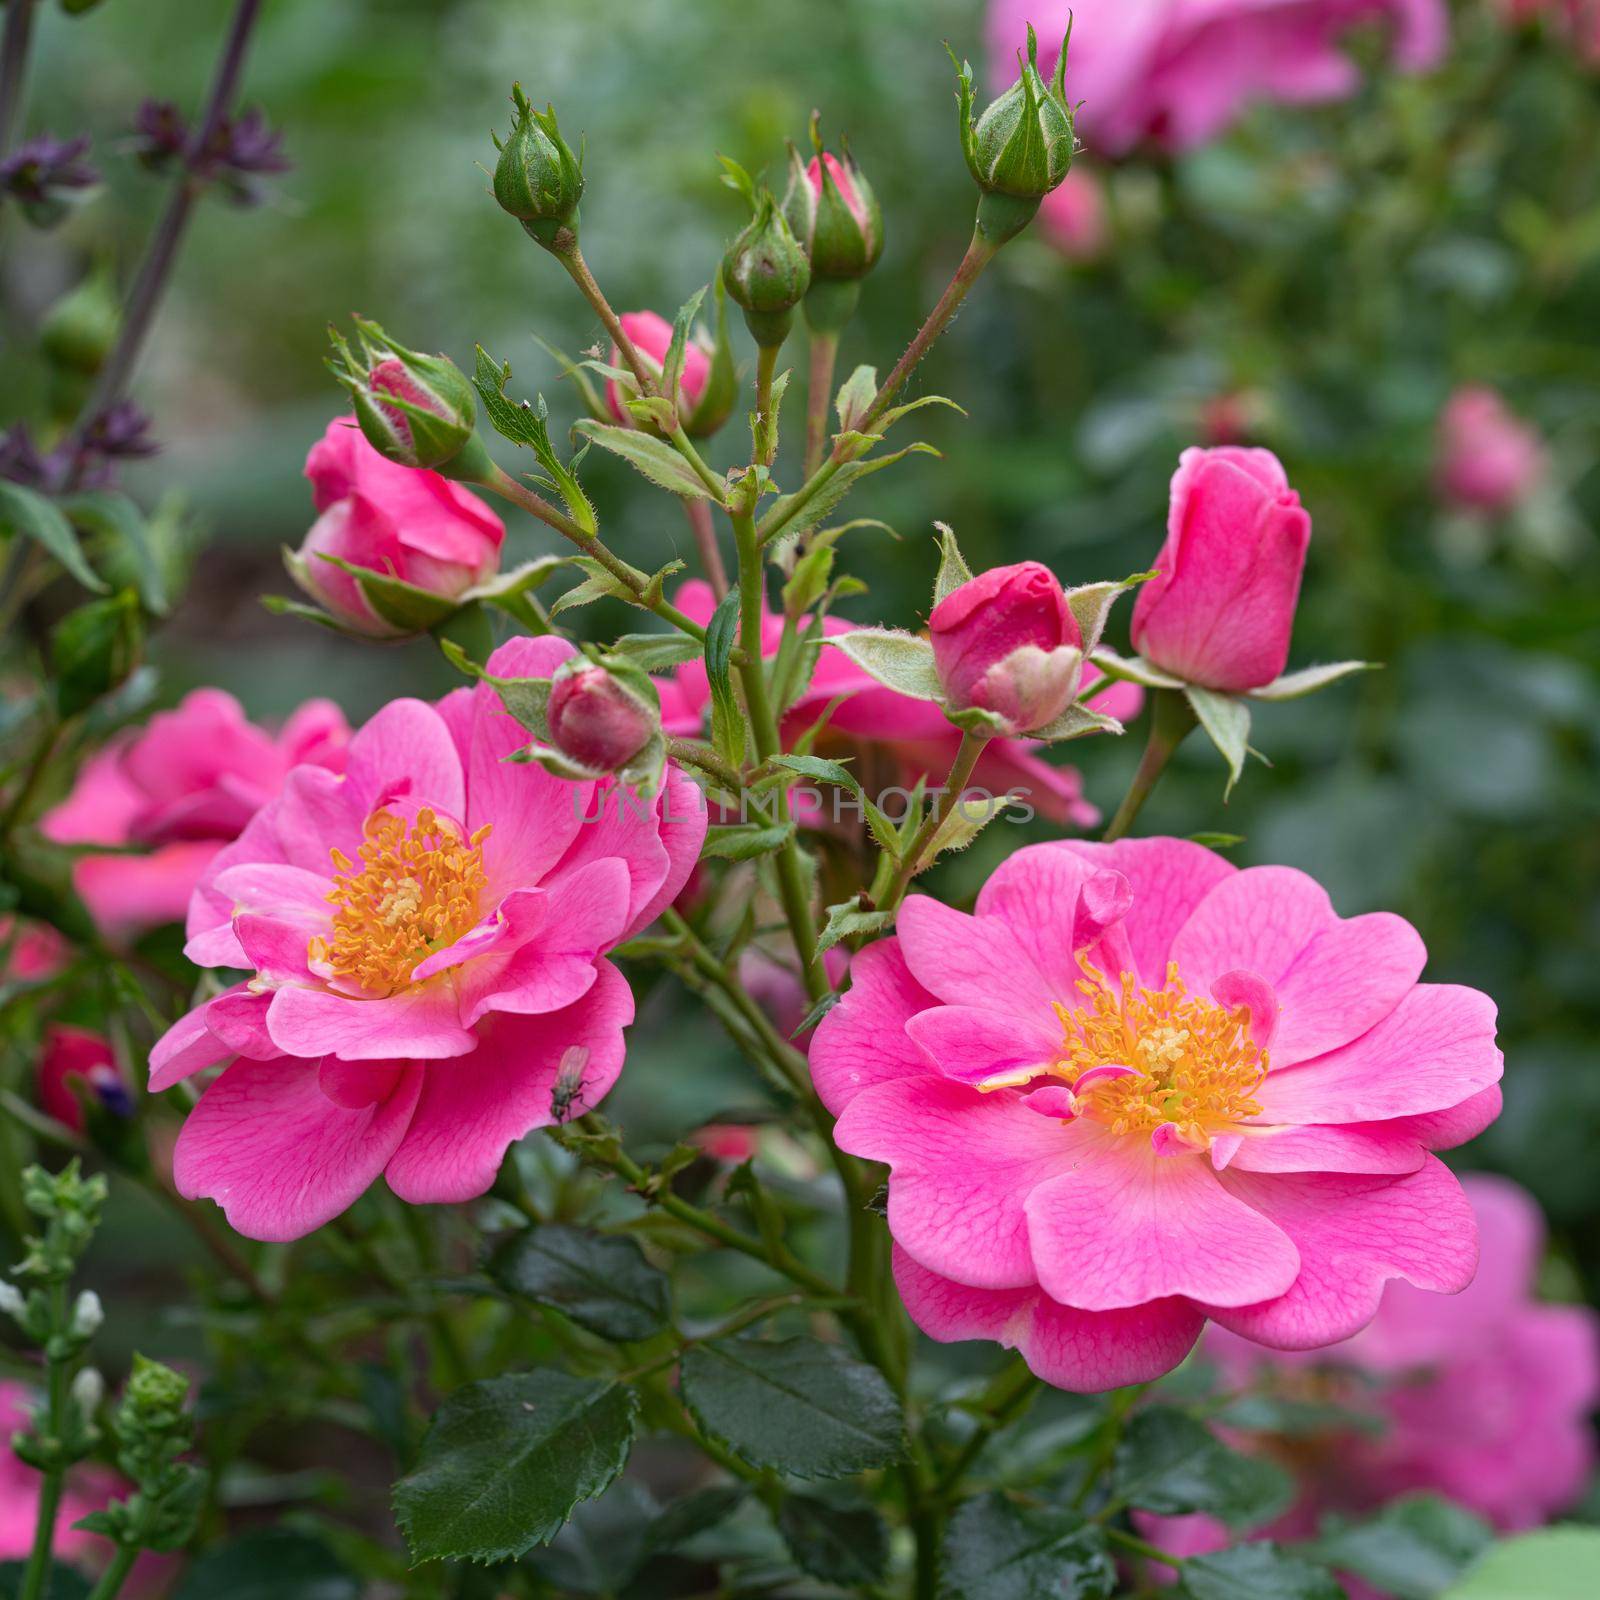 Dwarf rose, Rosa patio by alfotokunst